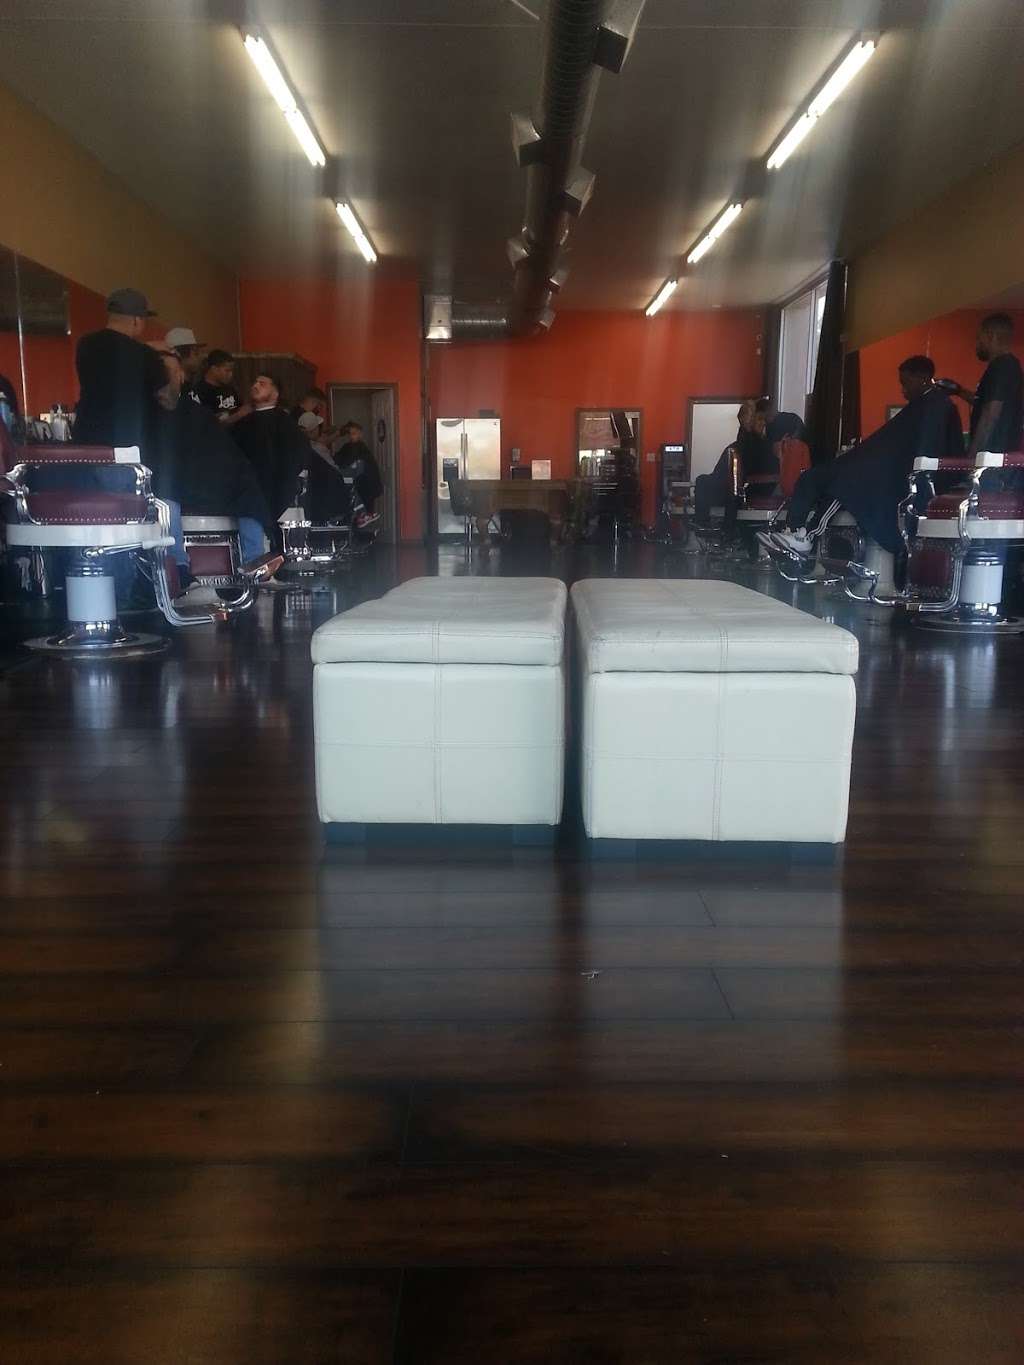 The Lounge Barbershop | 1101 S South La Brea Ave, Inglewood, CA 90301, USA | Phone: (424) 223-7133